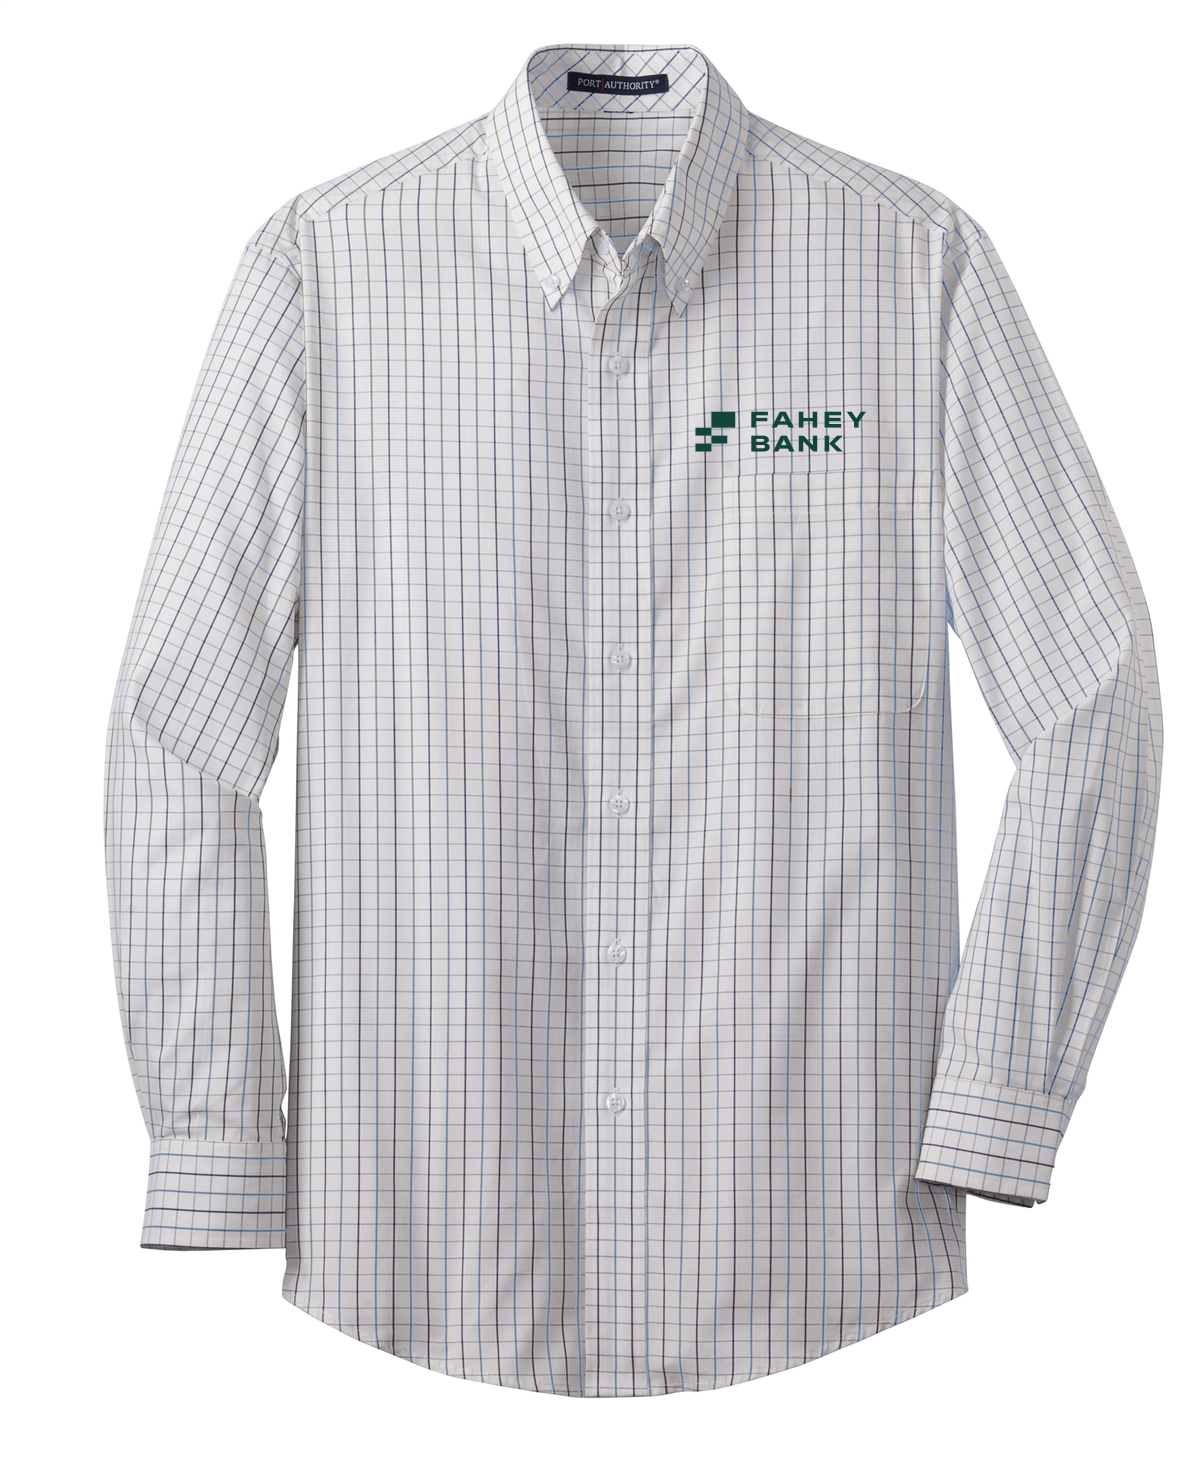 Port Authority® Tattersall Easy Care Shirt FAHEY Bank